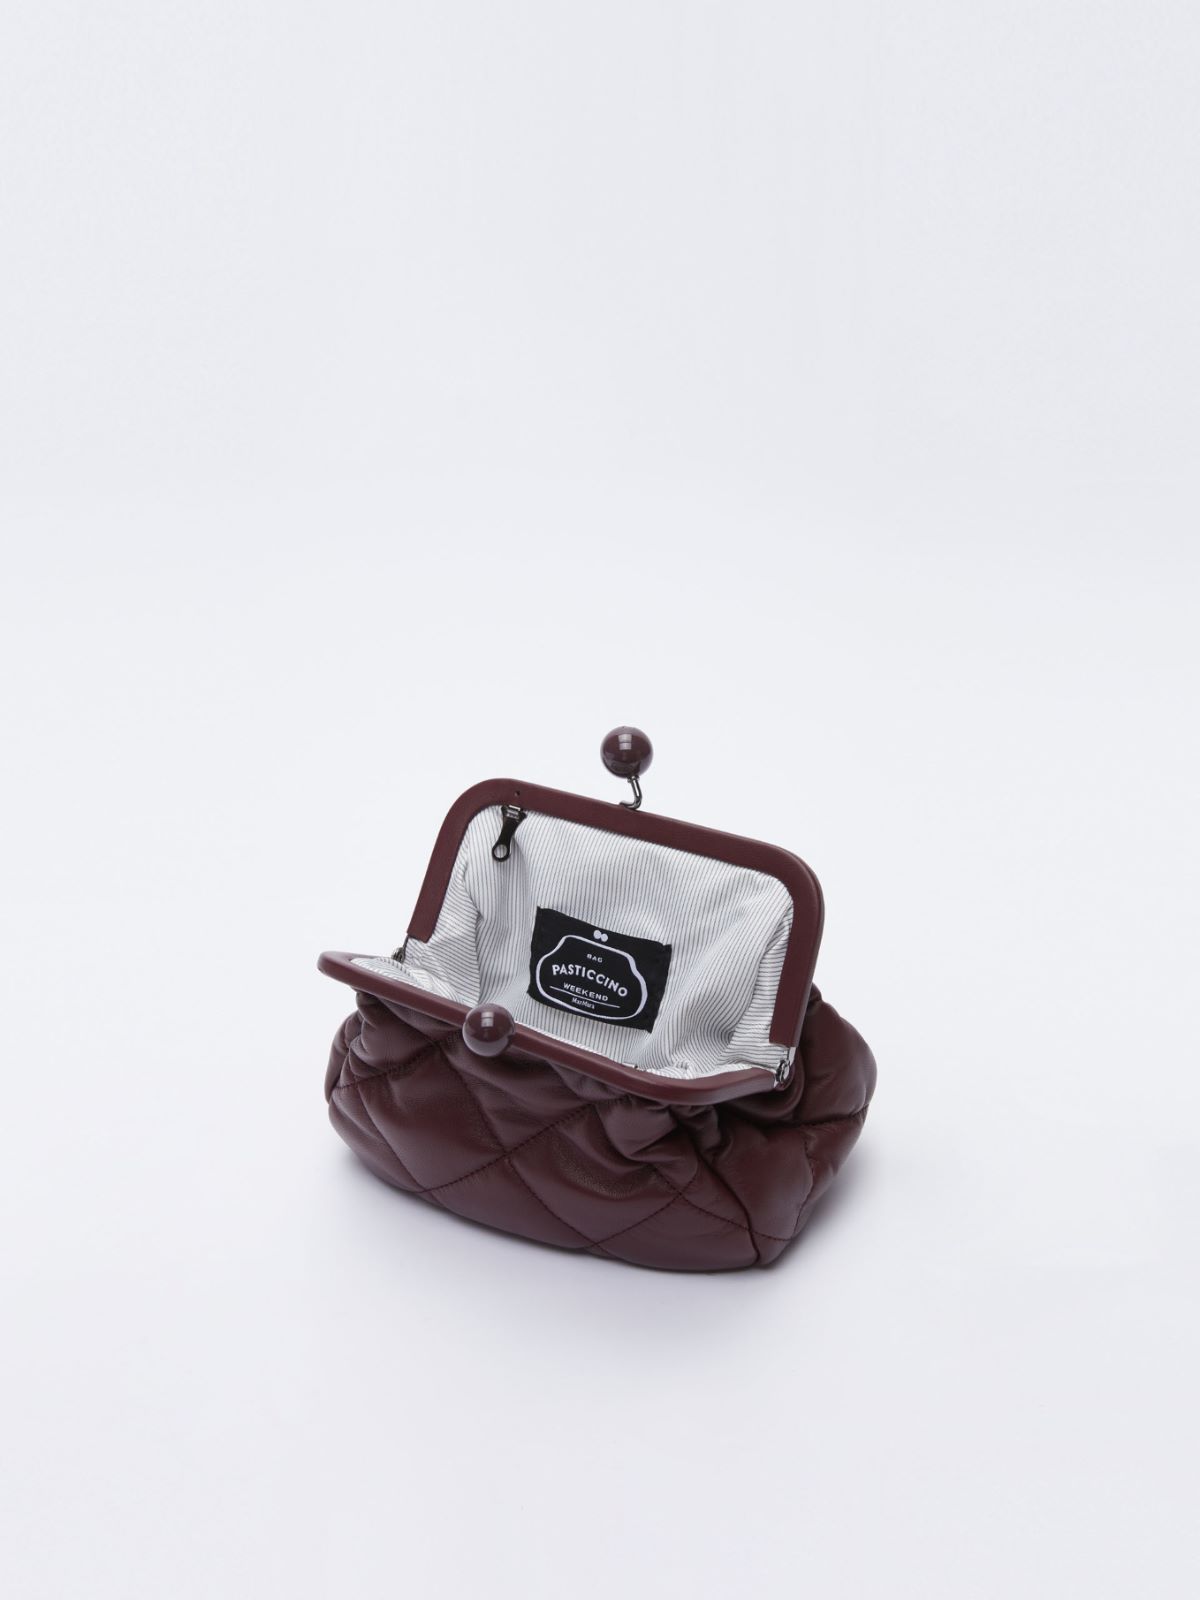 Nappa leather Pasticcino Bag - BORDEAUX - Weekend Max Mara - 5